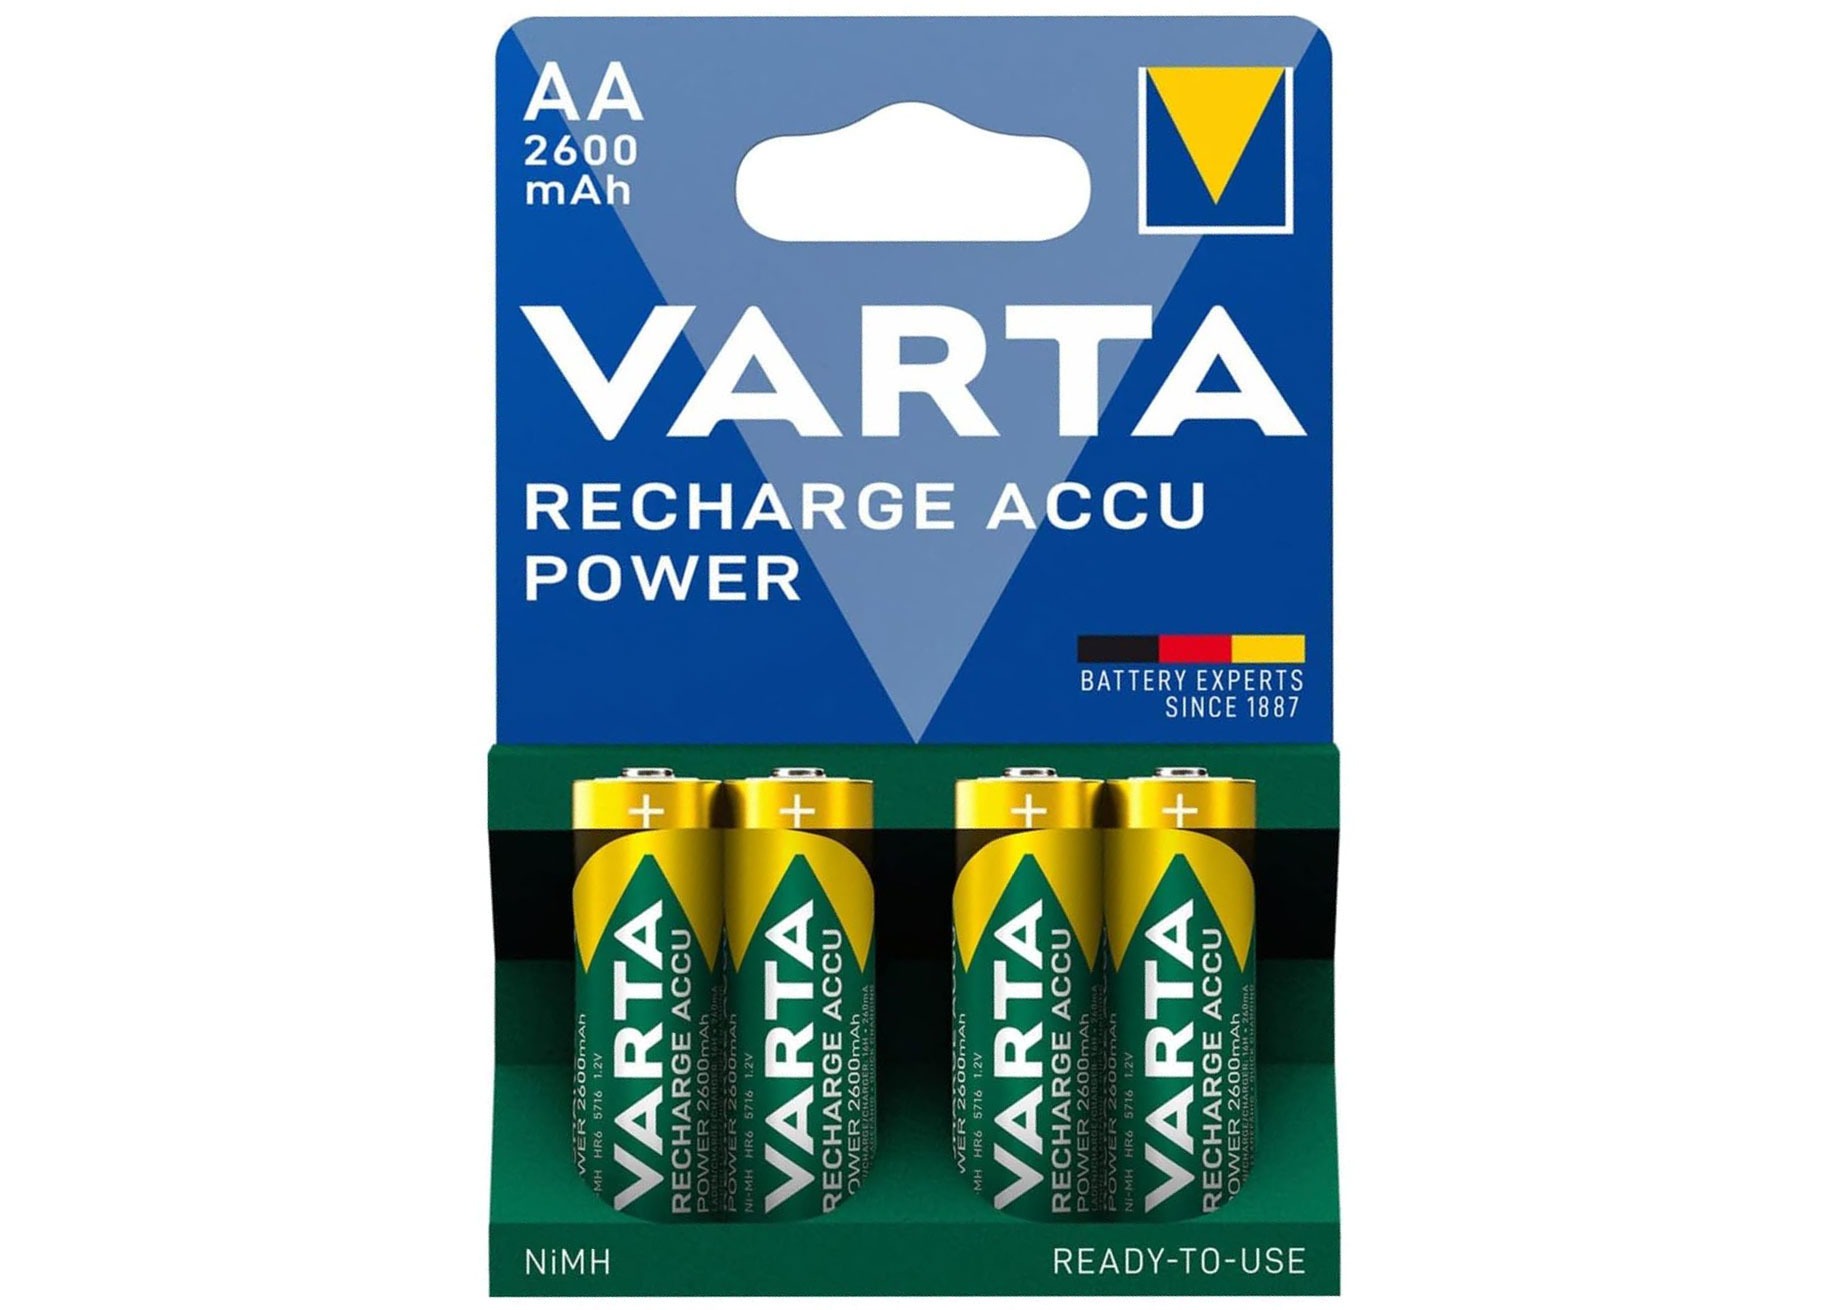 Emballage Varta Rechargeable accu AA NiMH 2600 mAh.